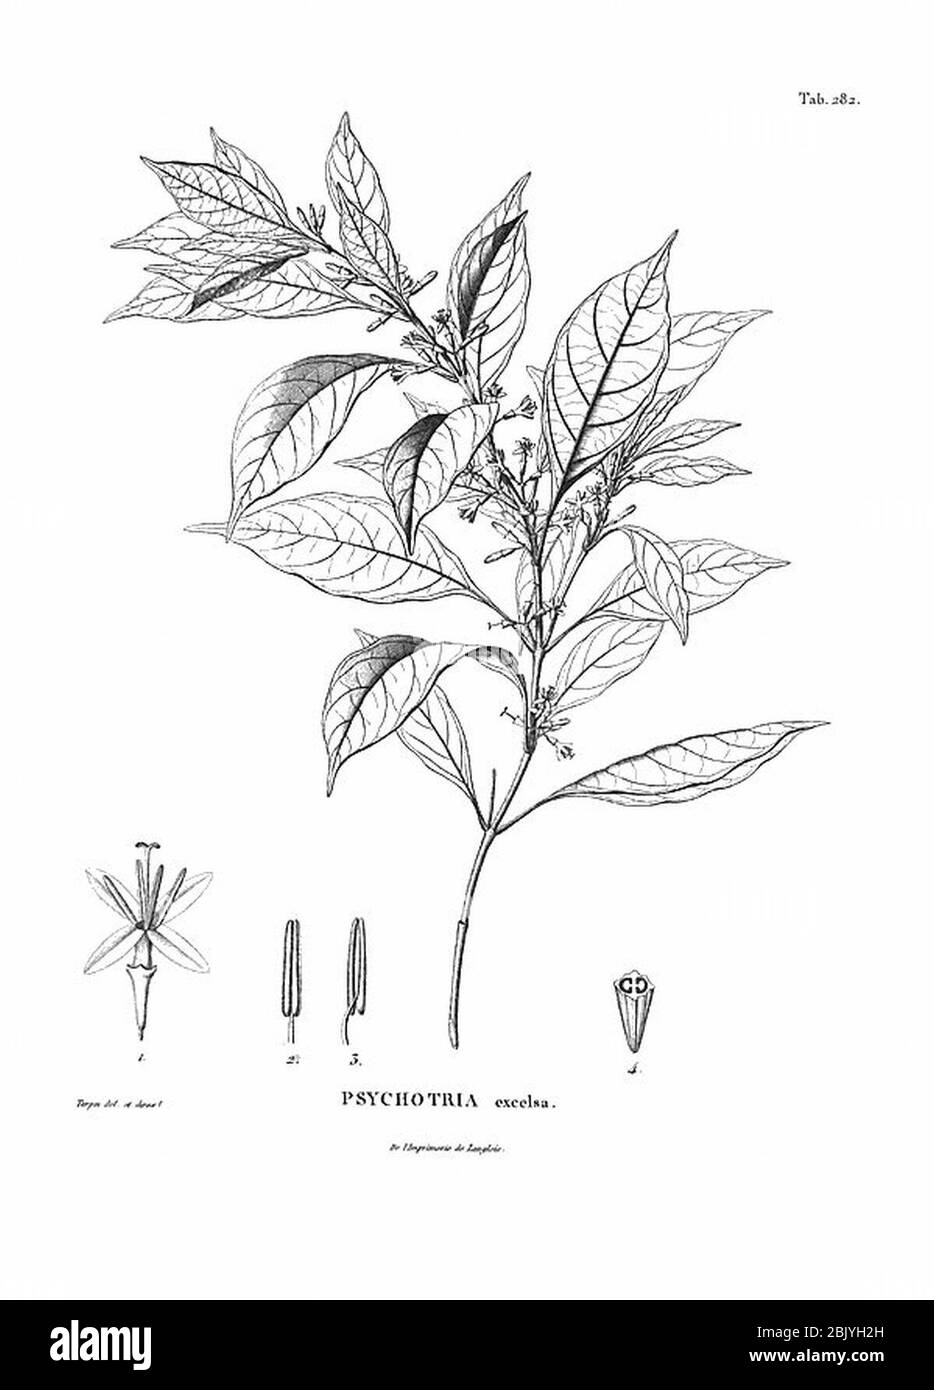 Hoffmannia excelsa (Kunth) K. Schum. Stock Photo